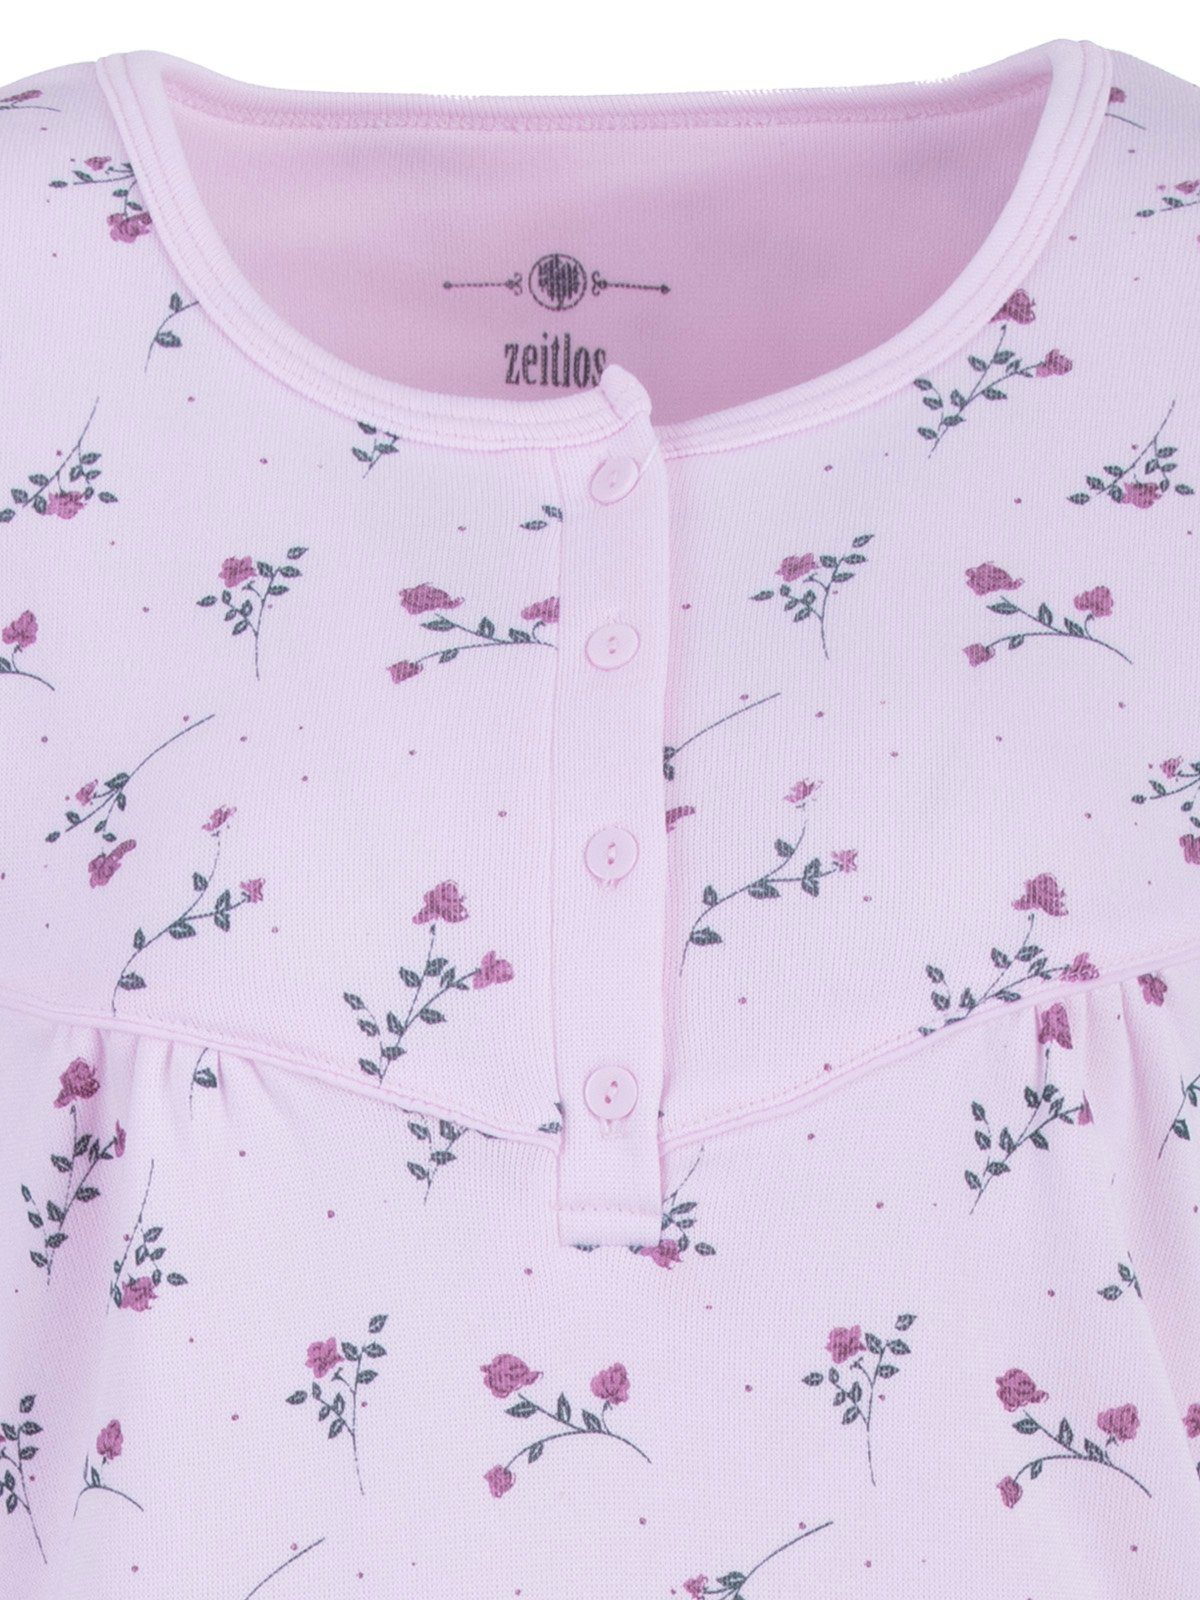 zeitlos Nachthemd Thermo Nachthemd - Blumen Paspel rosa